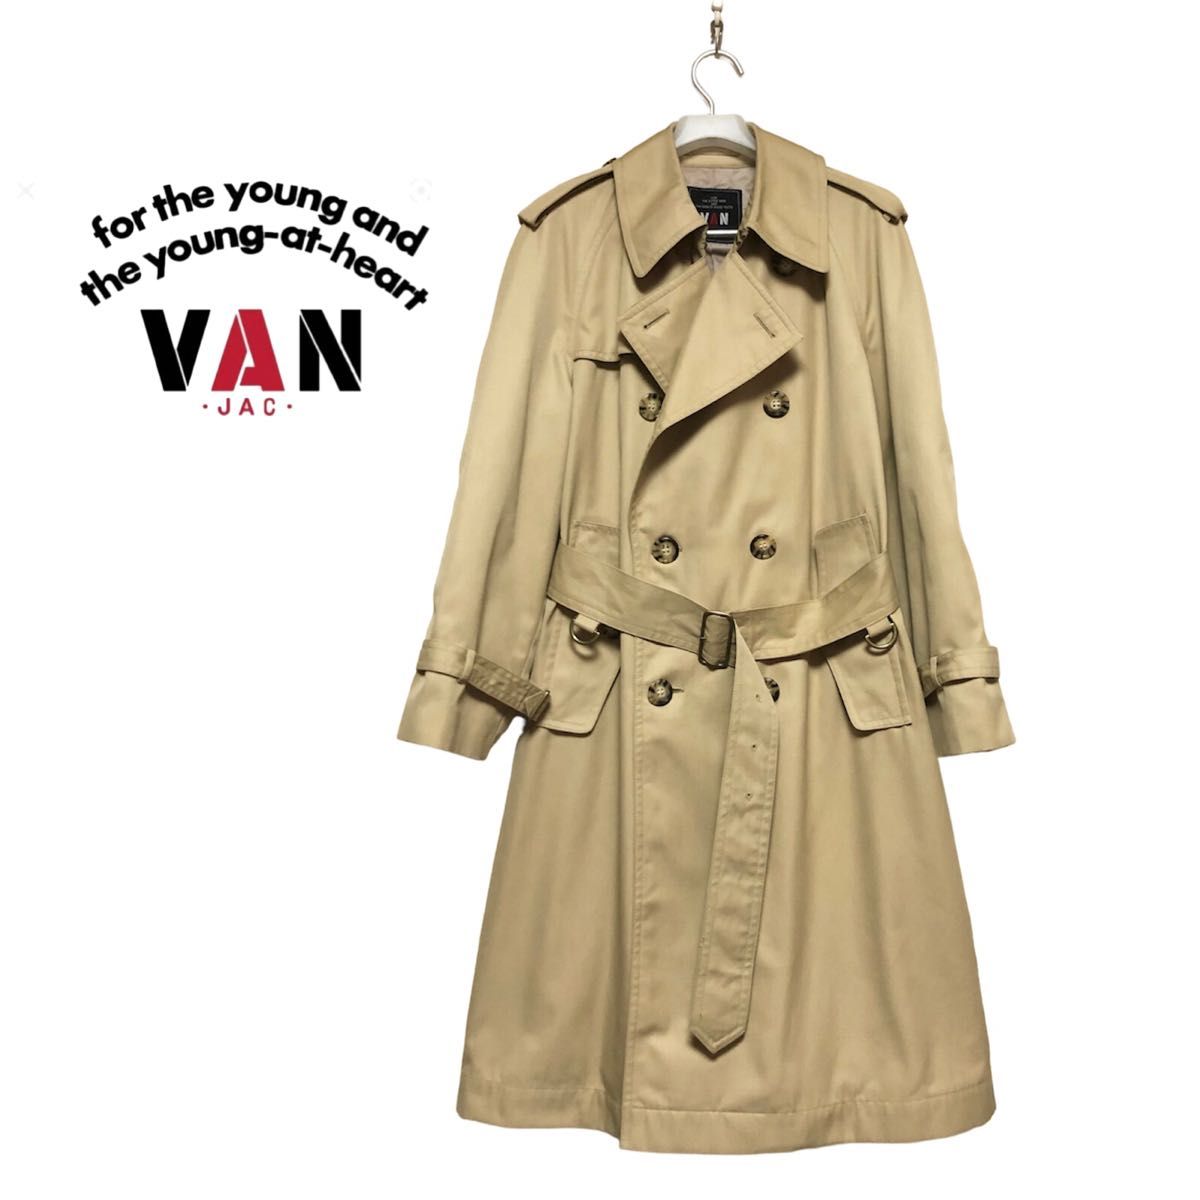 VAN Jacket［70s］［ユニセックス］ヴィンテージトレンチコート